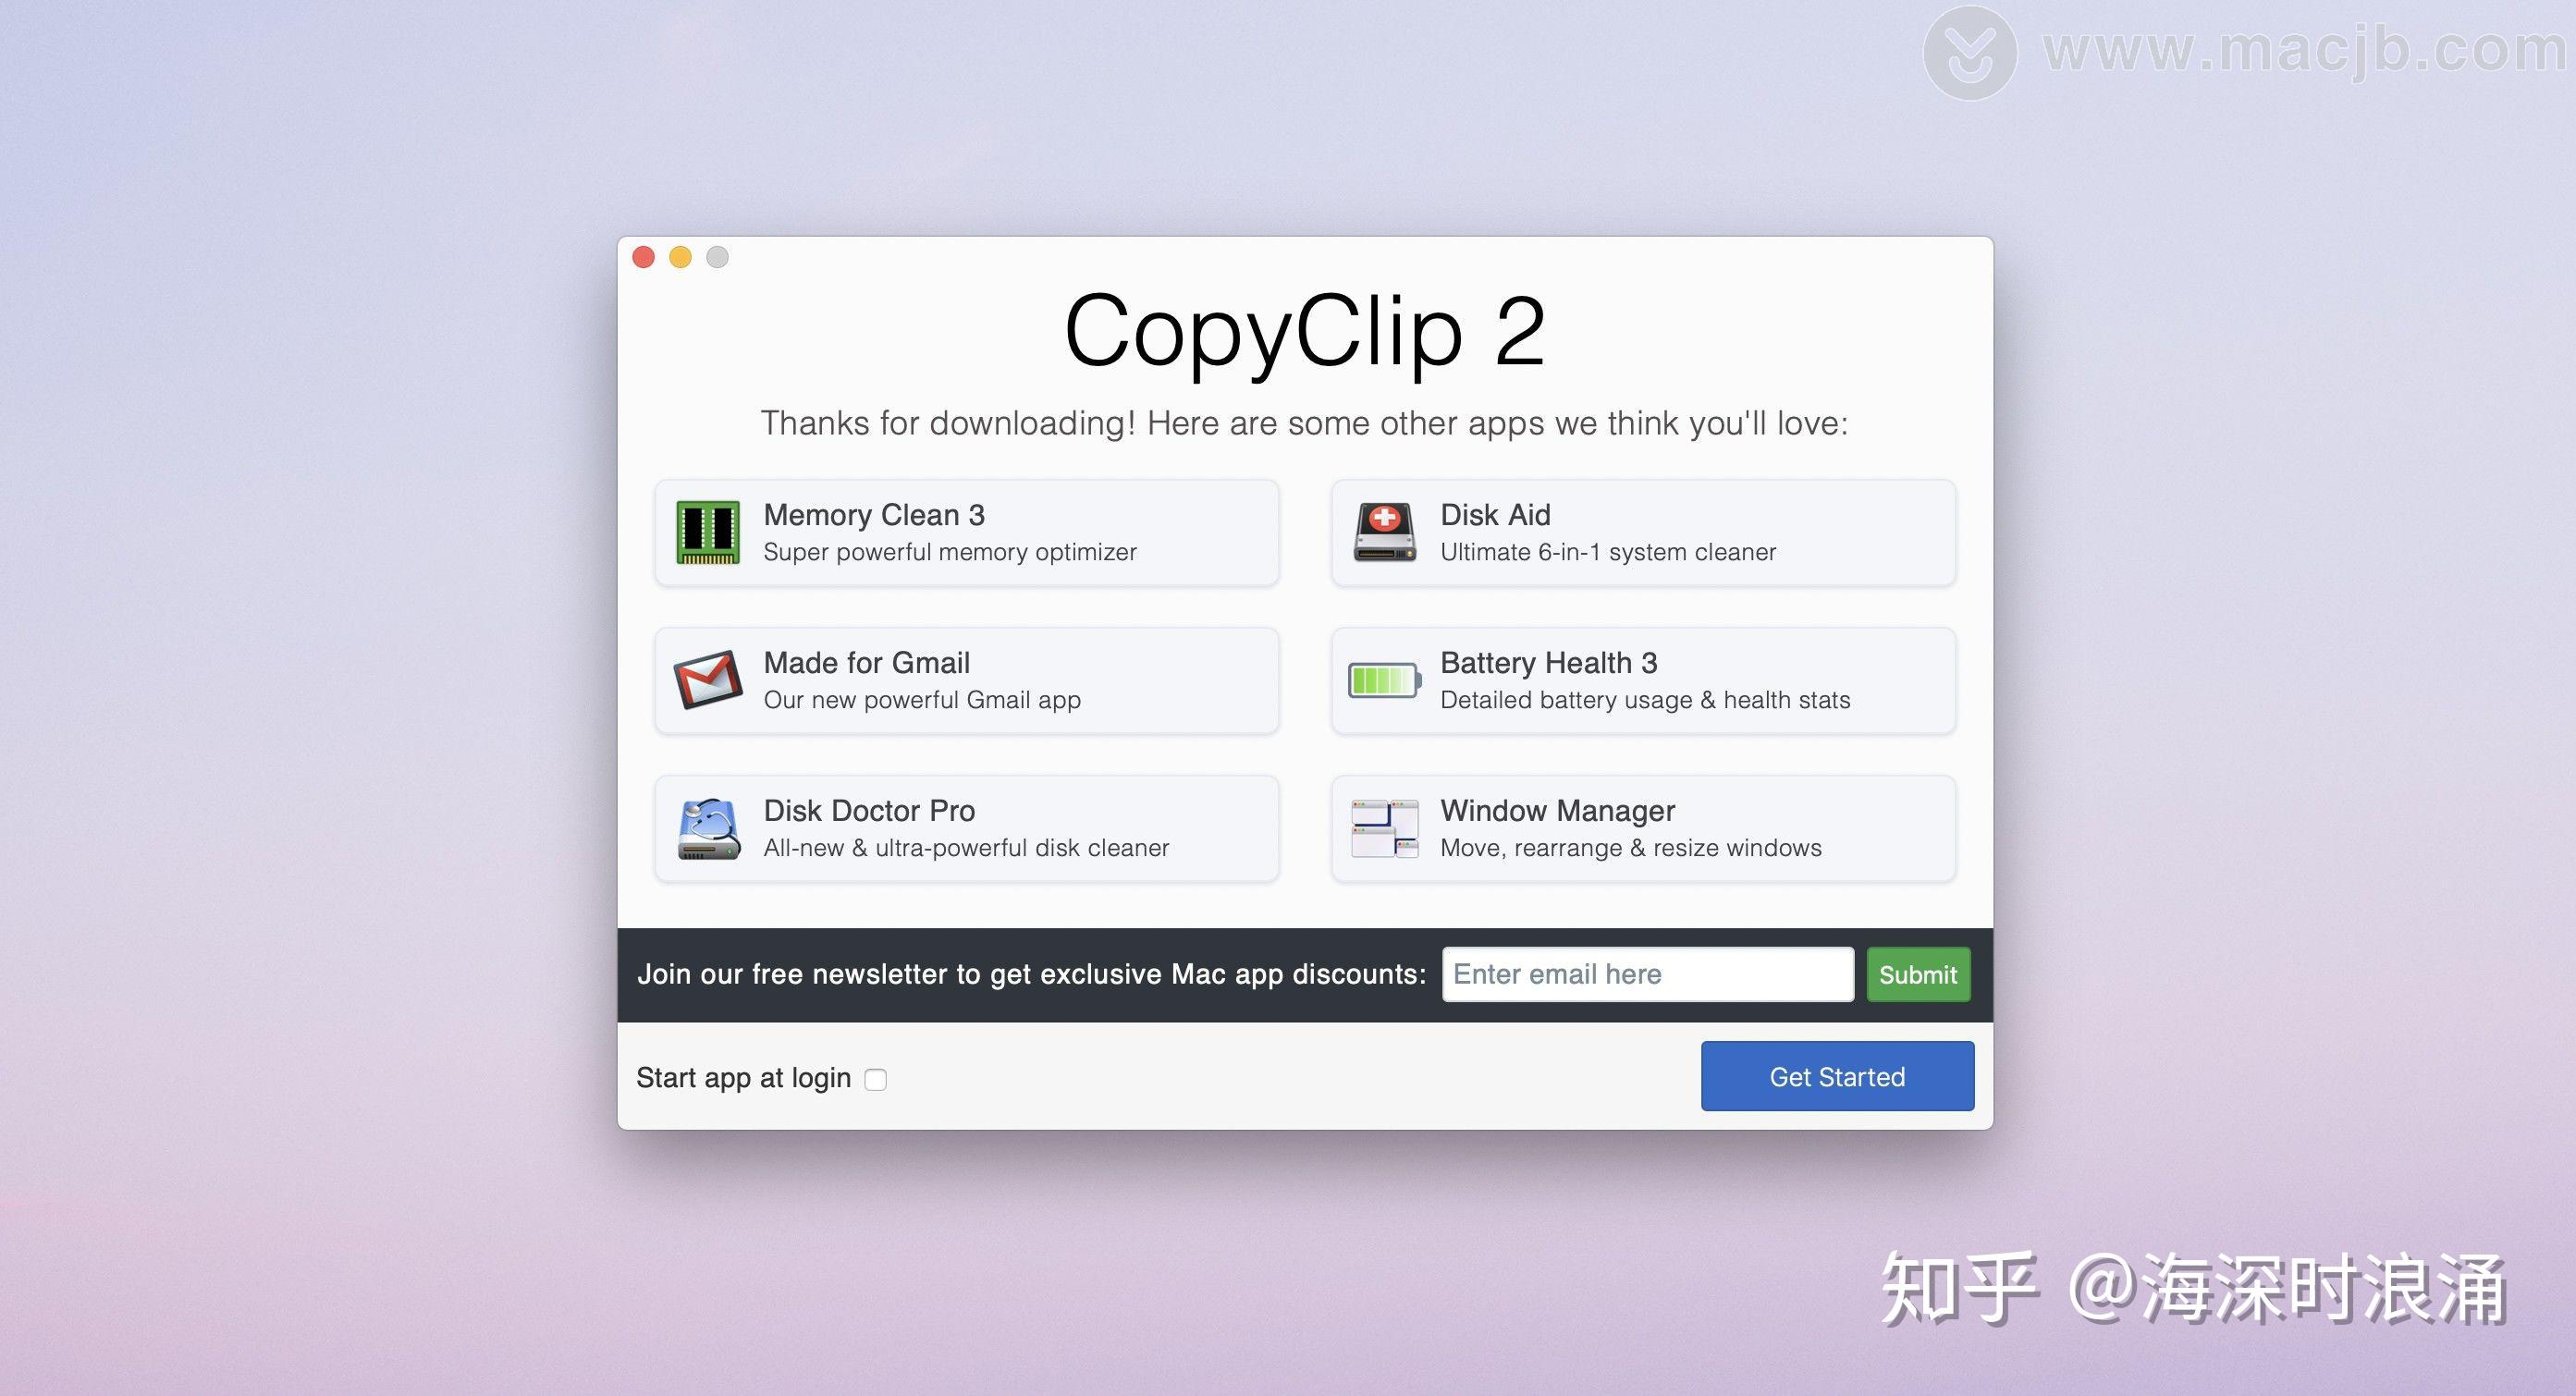 CopyClip 2 download the new version